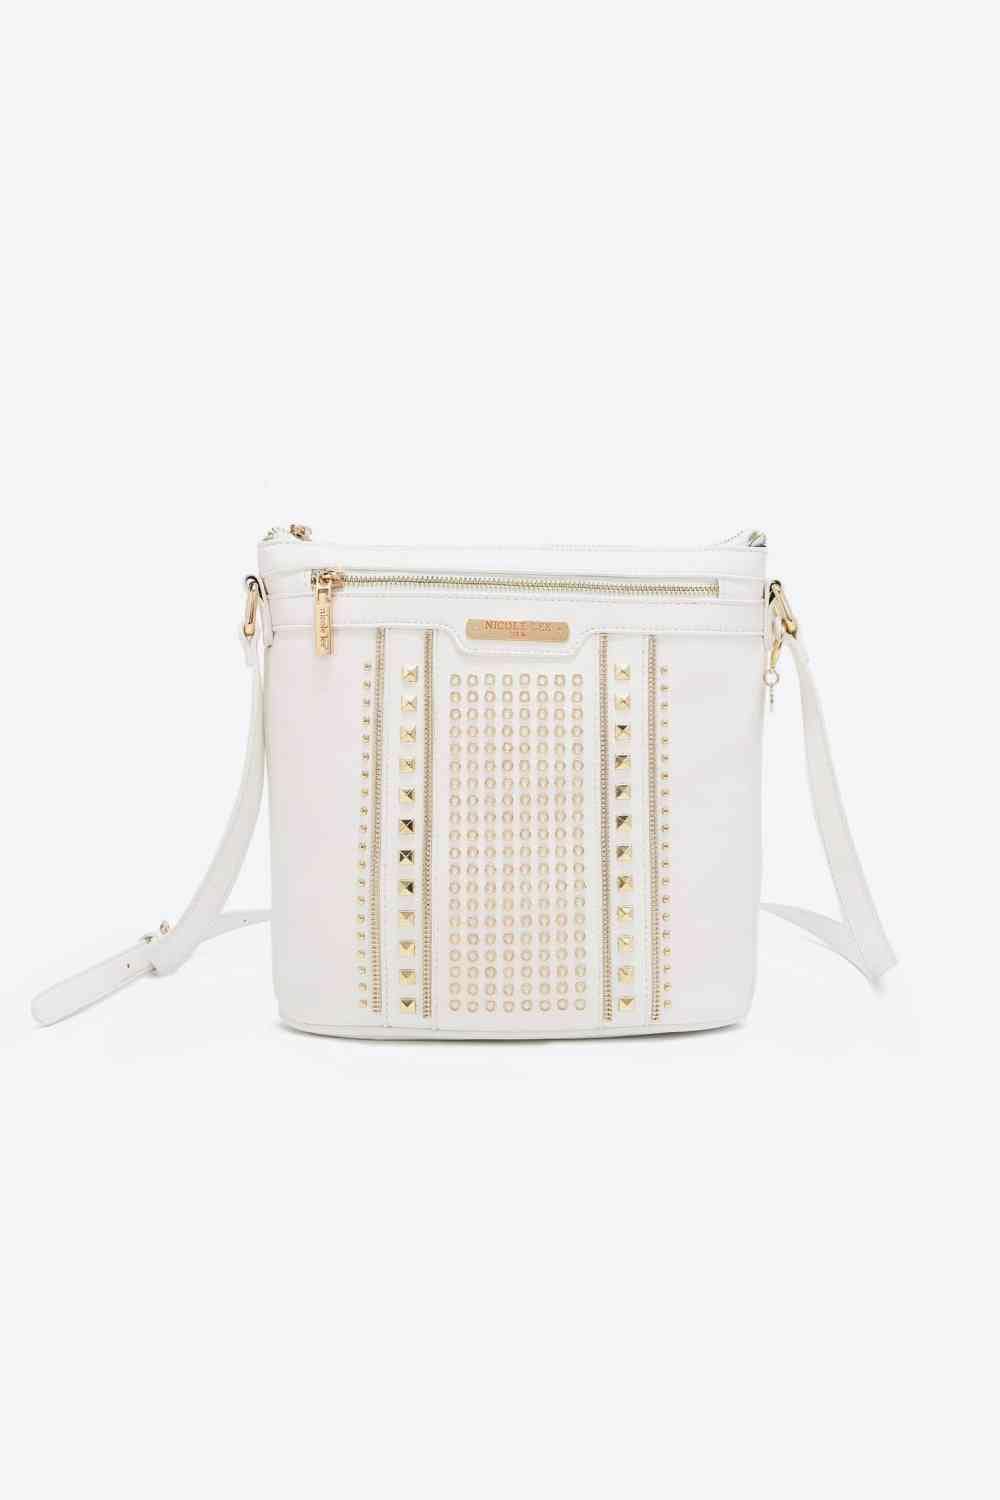 The802Gypsy Handbags, Wallets & Cases White / One Size GYPSY-Nicole Lee USA-Handbag